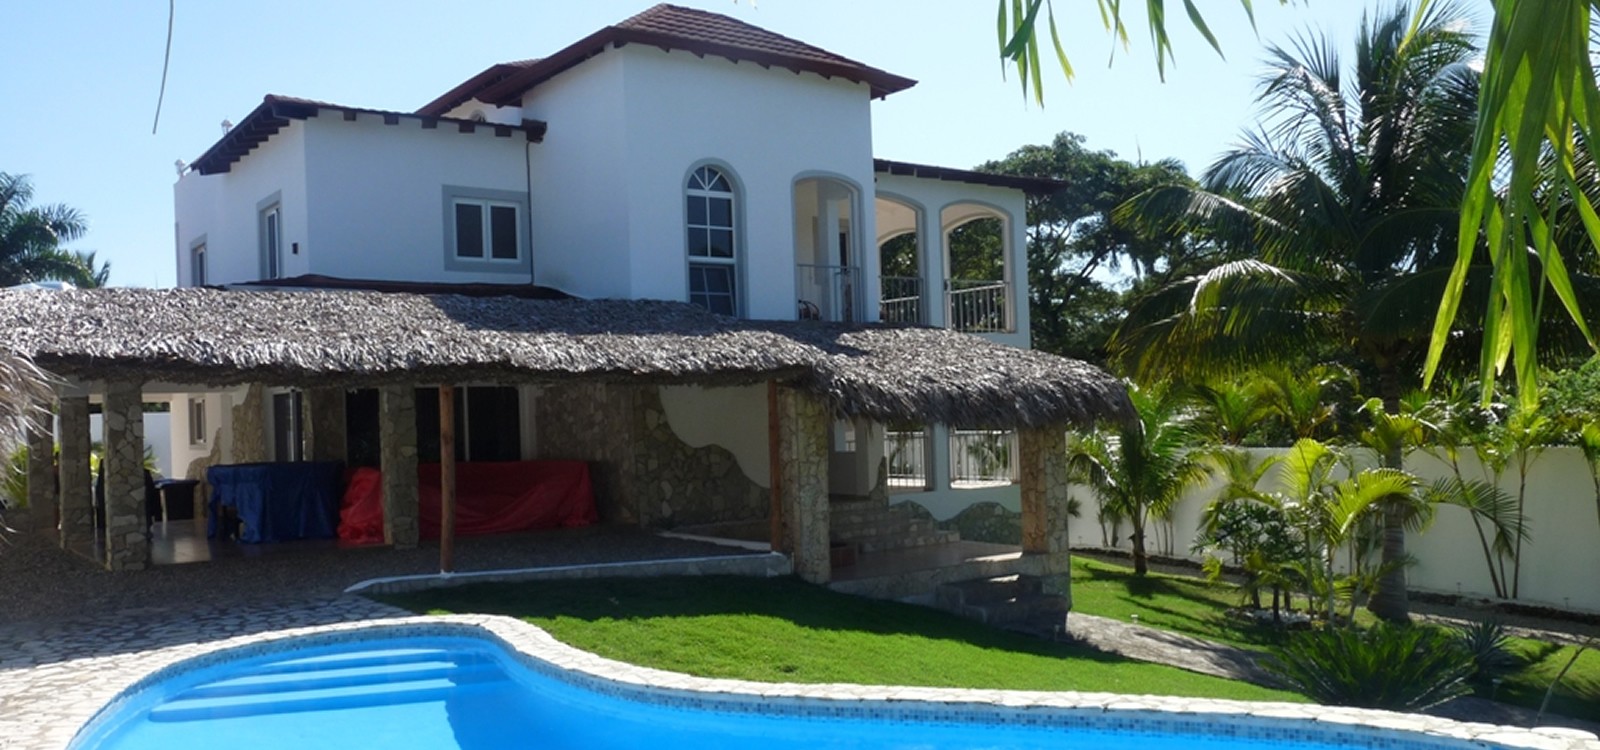 3 Bedroom Villa For Sale Sosua Dominican Republic 7th Heaven Properties